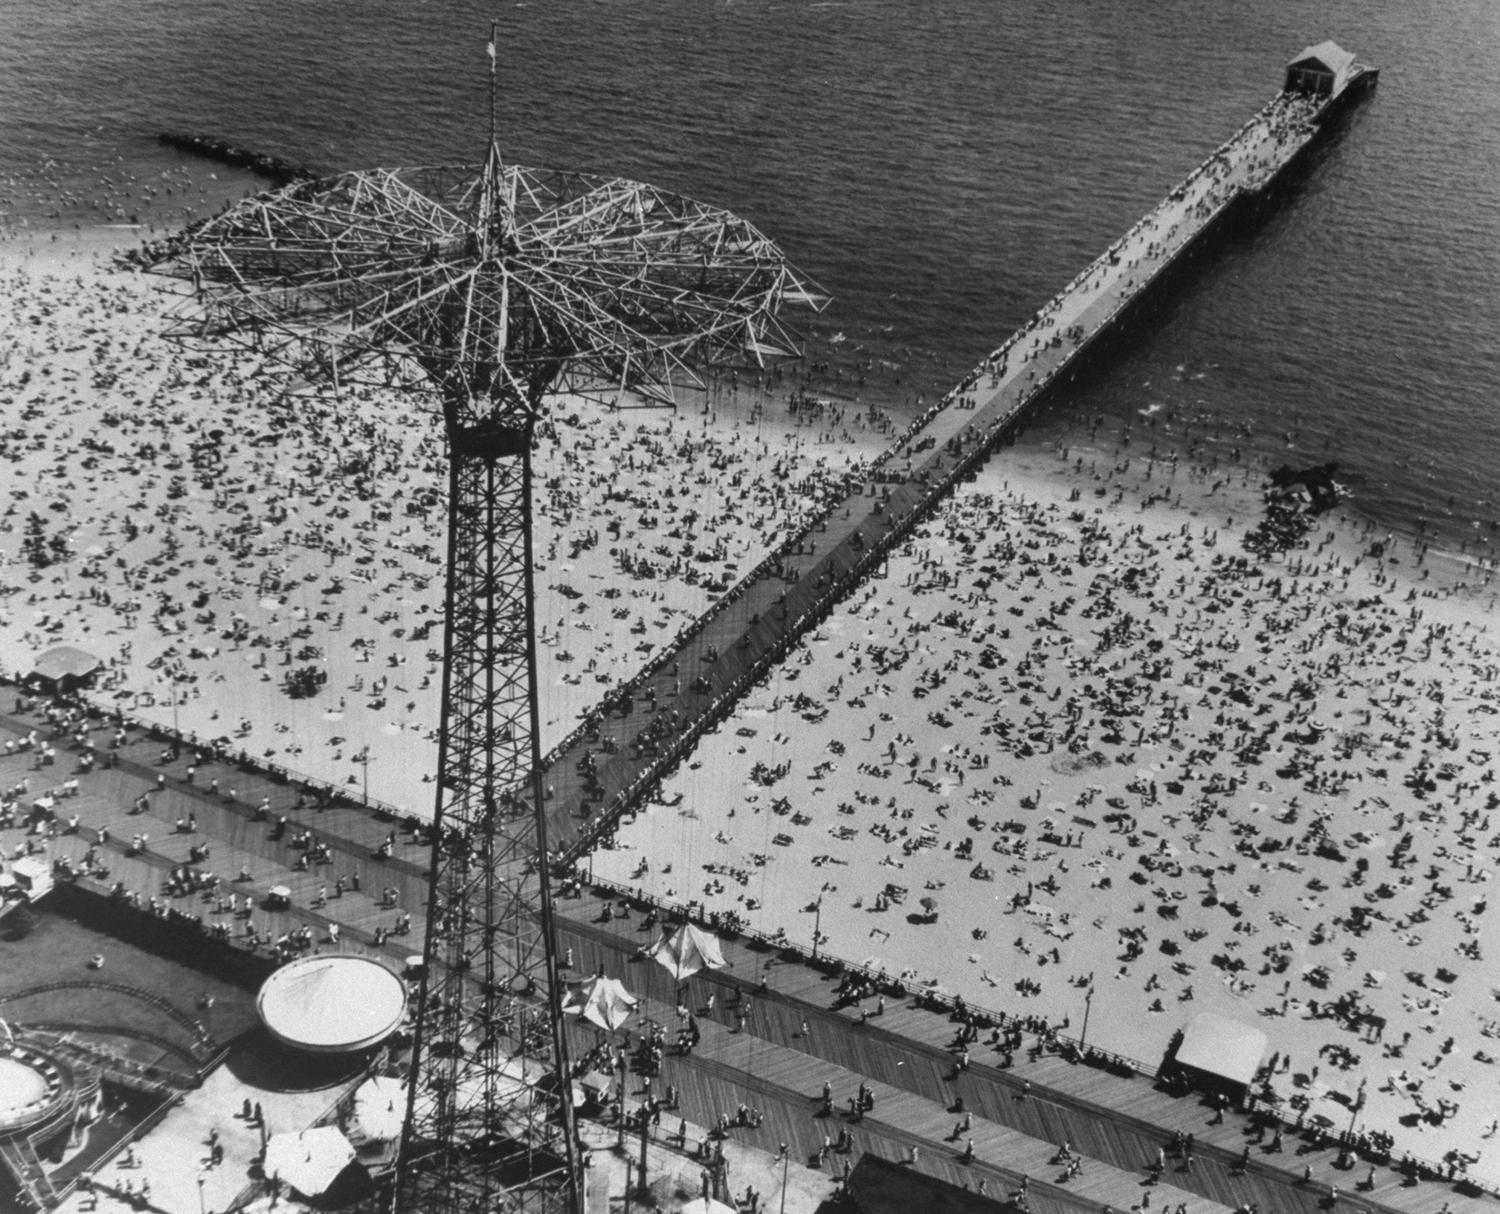 The Parachute Jump along the boardwalk at Coney Island, 1951.